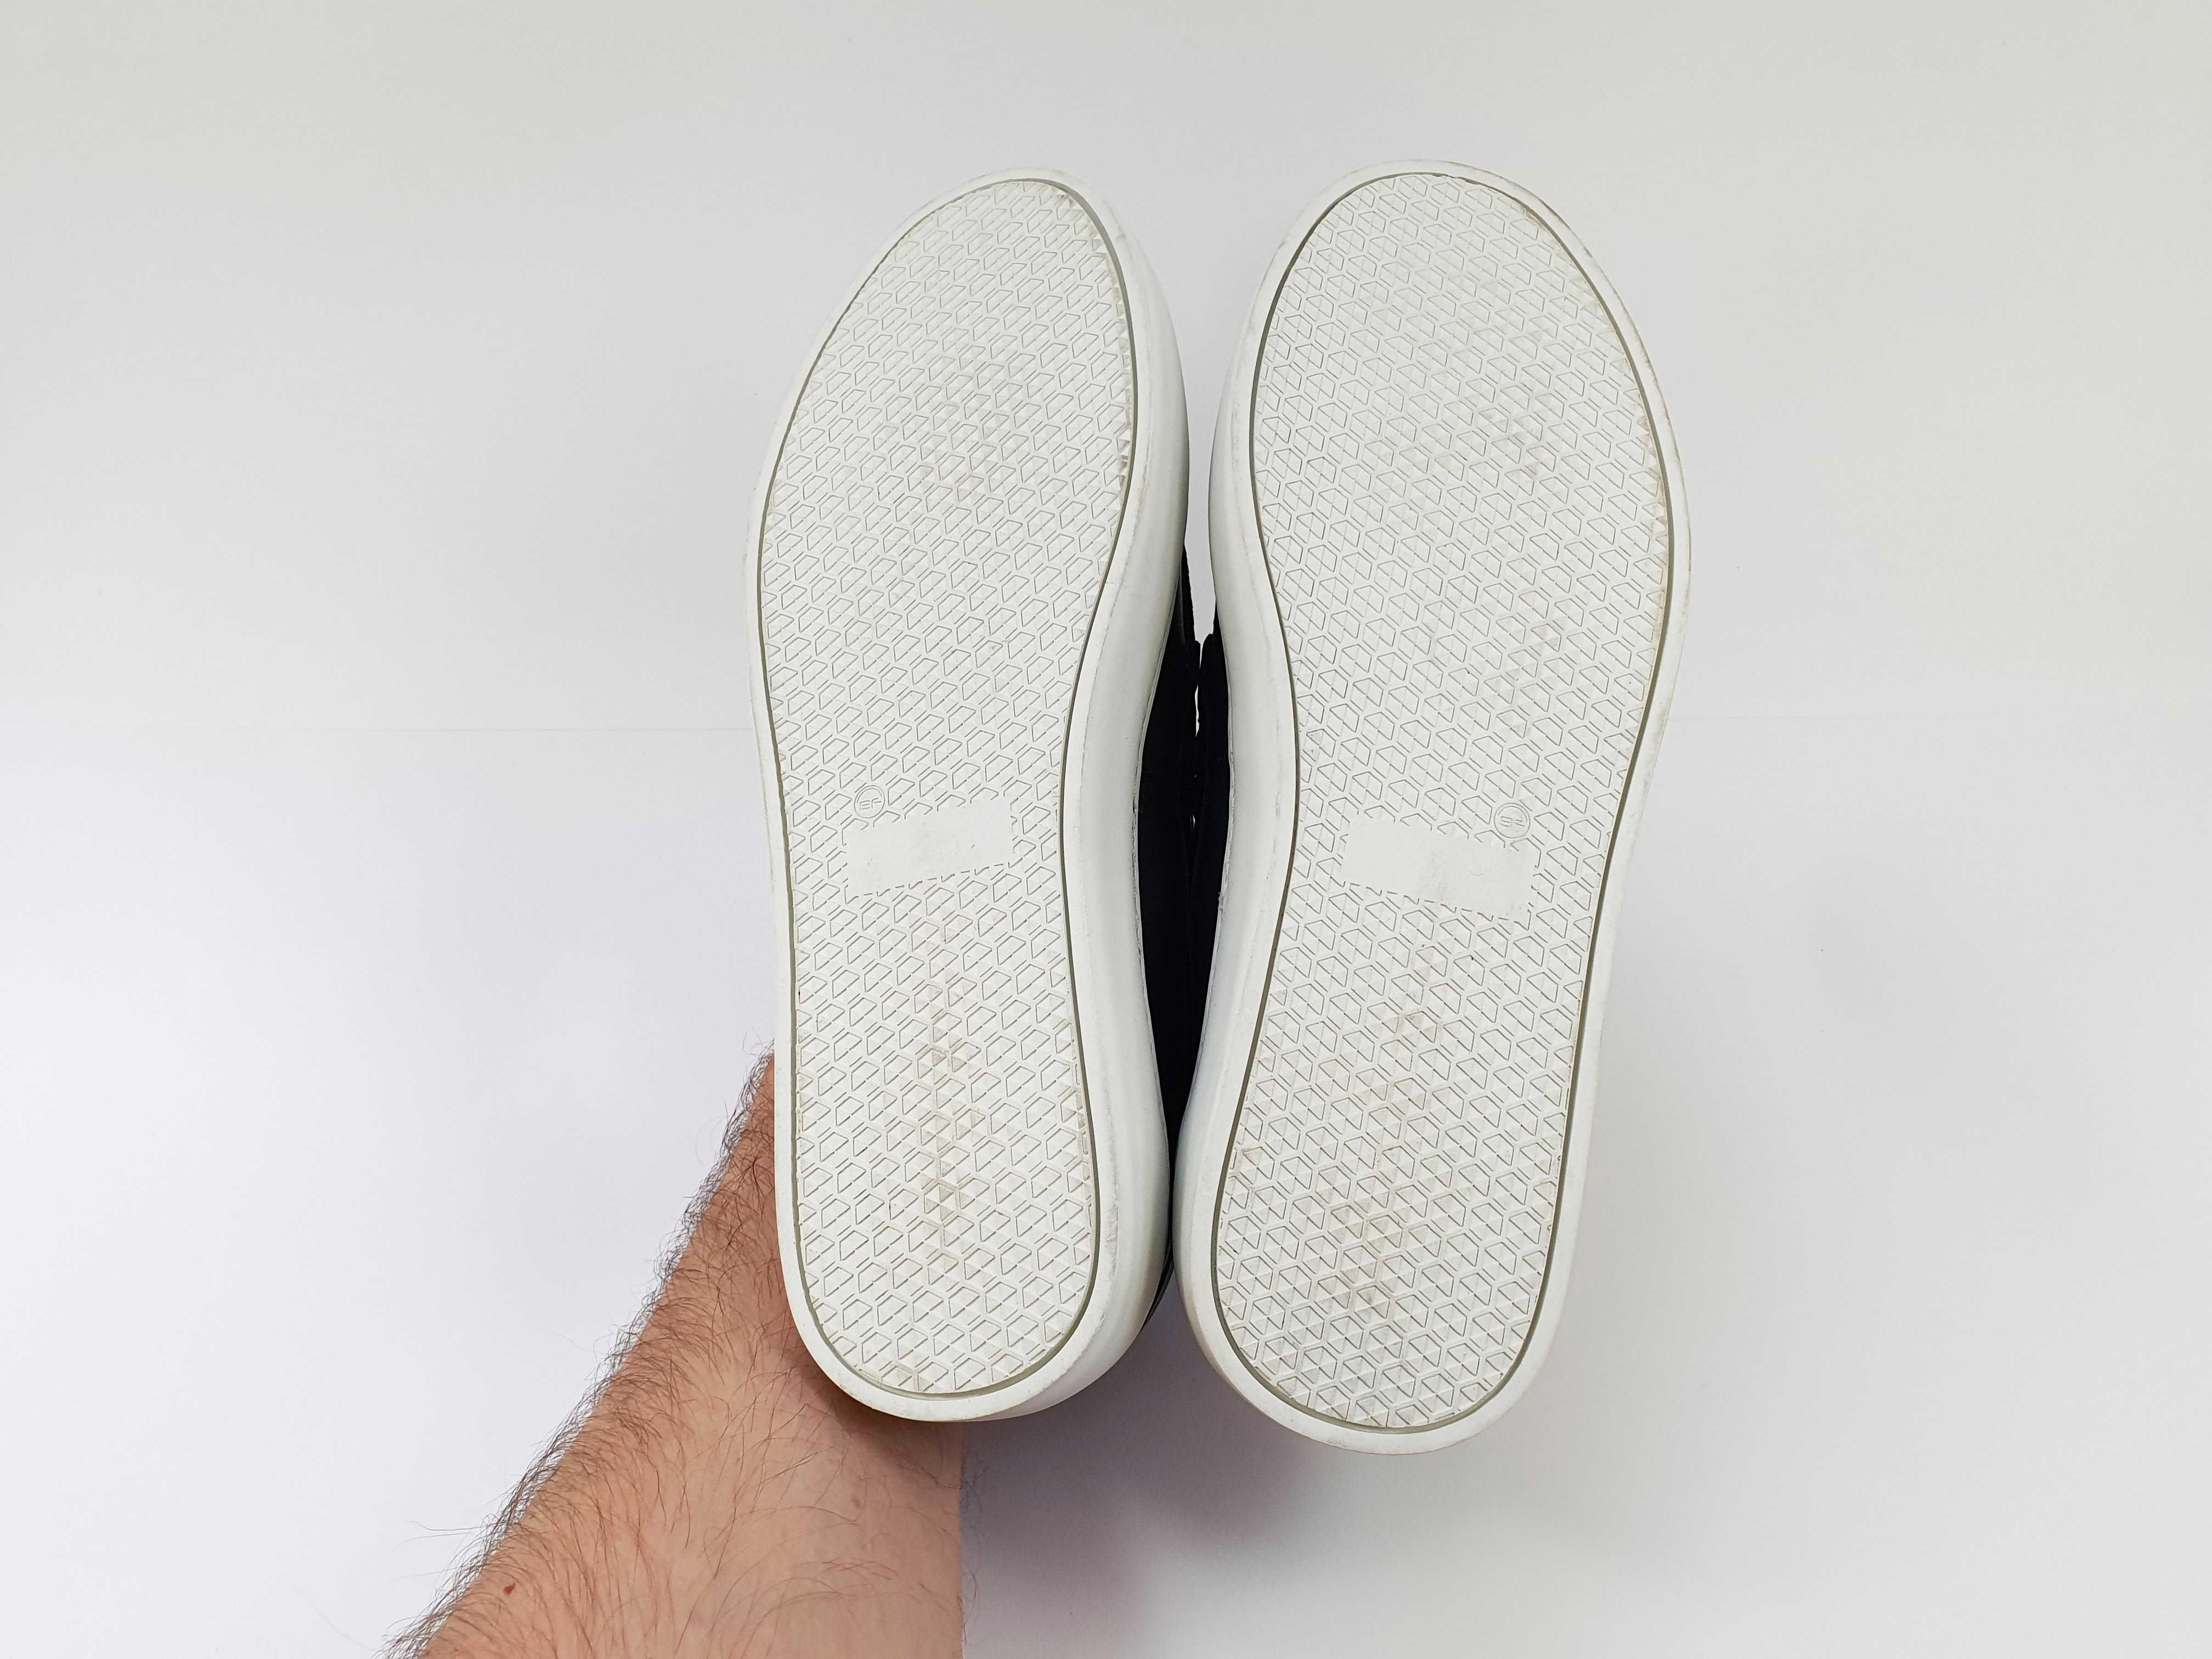 SANSIBAR Made in Portugal лоферы туфли мокасины 42 43 27-27.5 см